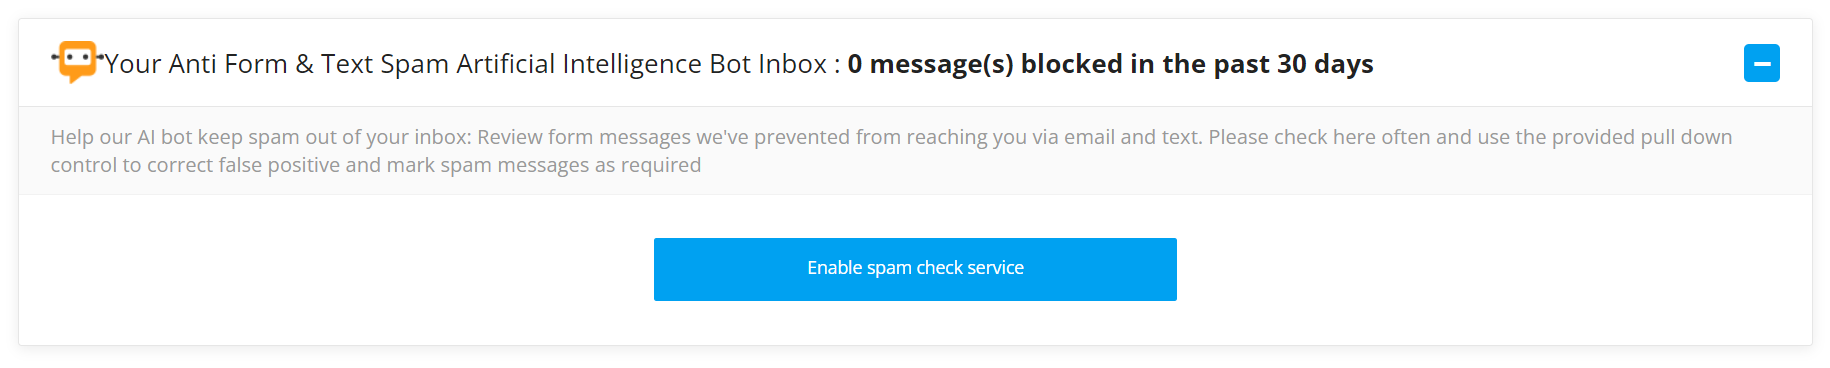 enable anti spam service